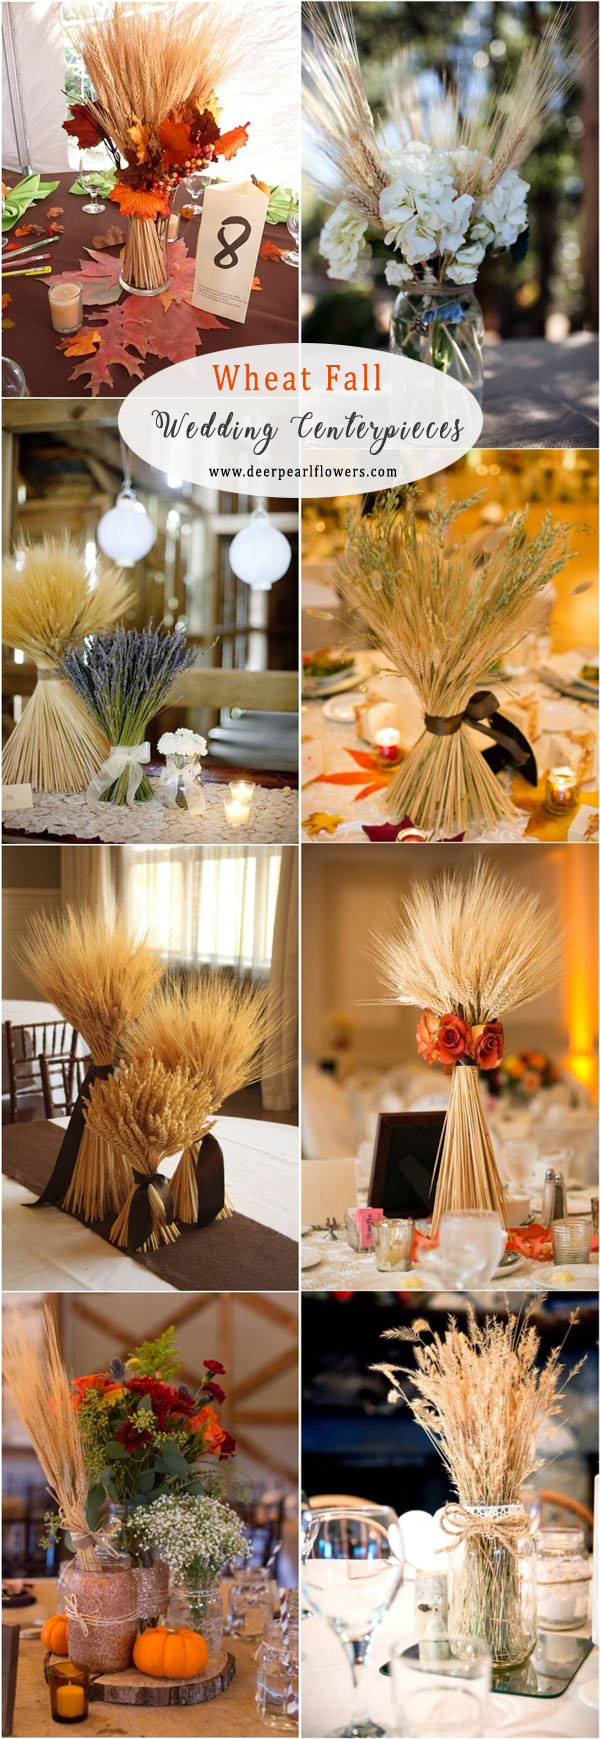 wheat fall wedding centerpiece ideas